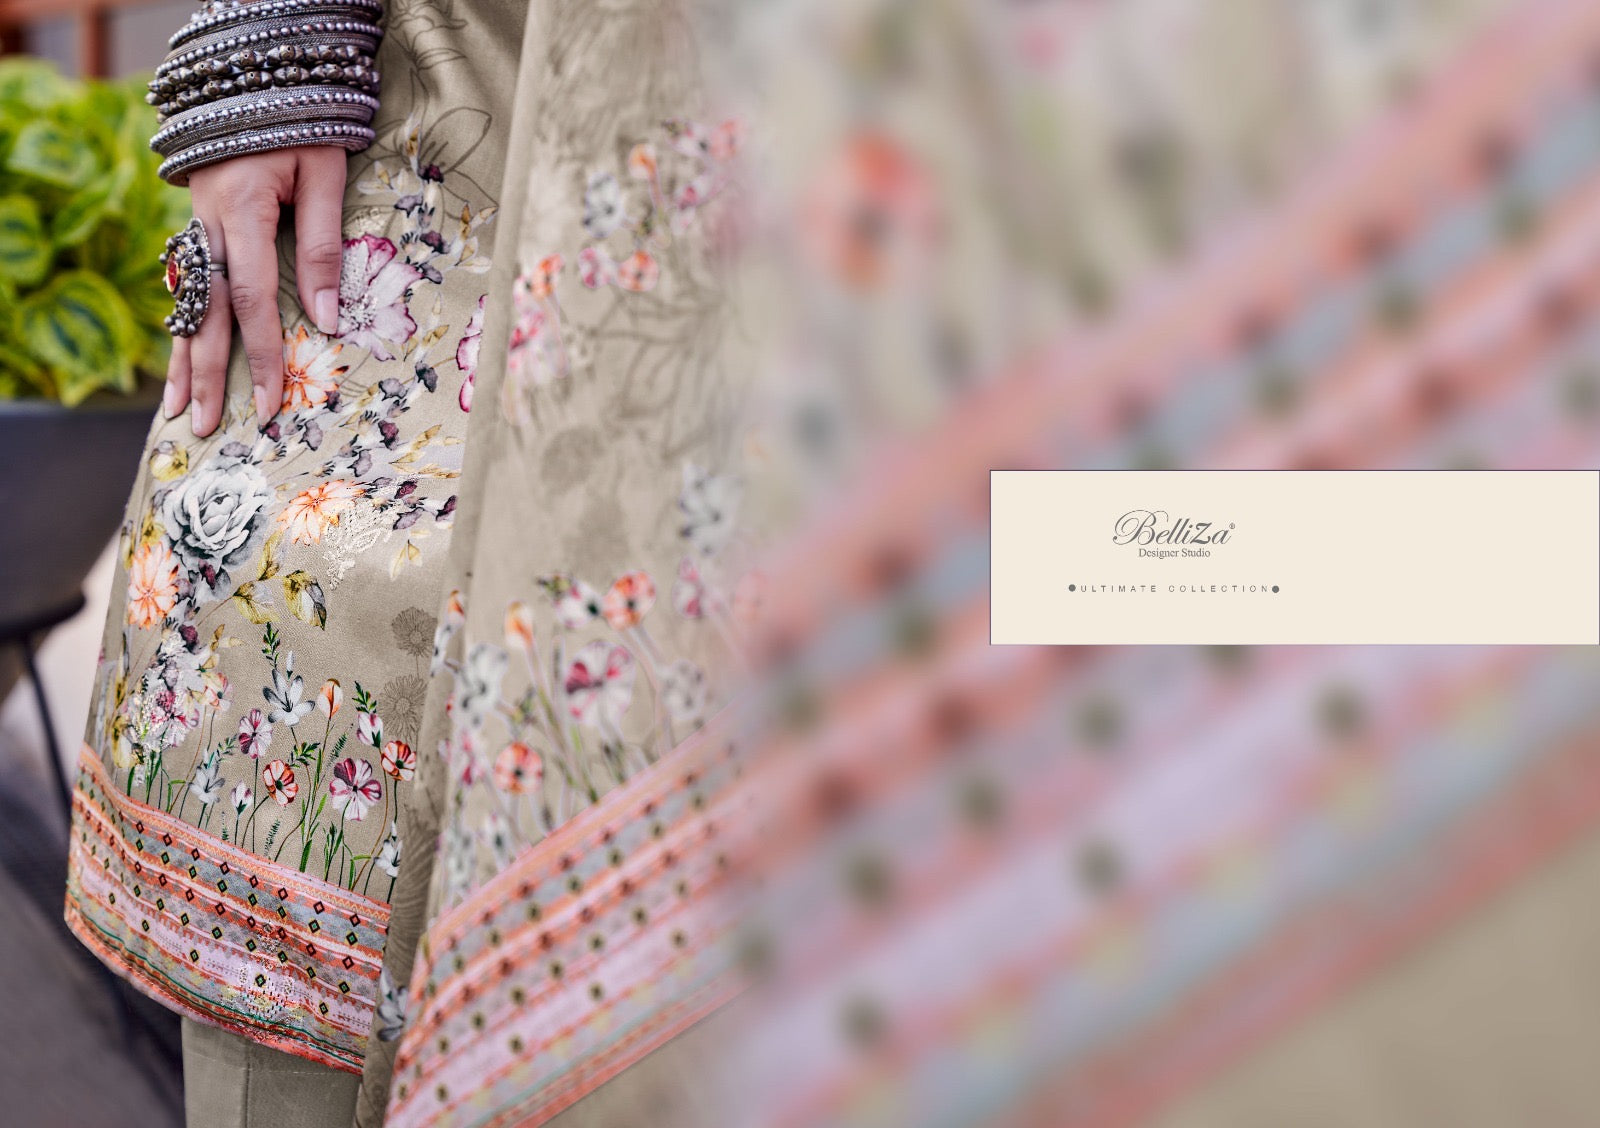 Belliza designer Studio Autograph jam cotton with embroidery work salwar kameez latest collection - jilaniwholesalesuit